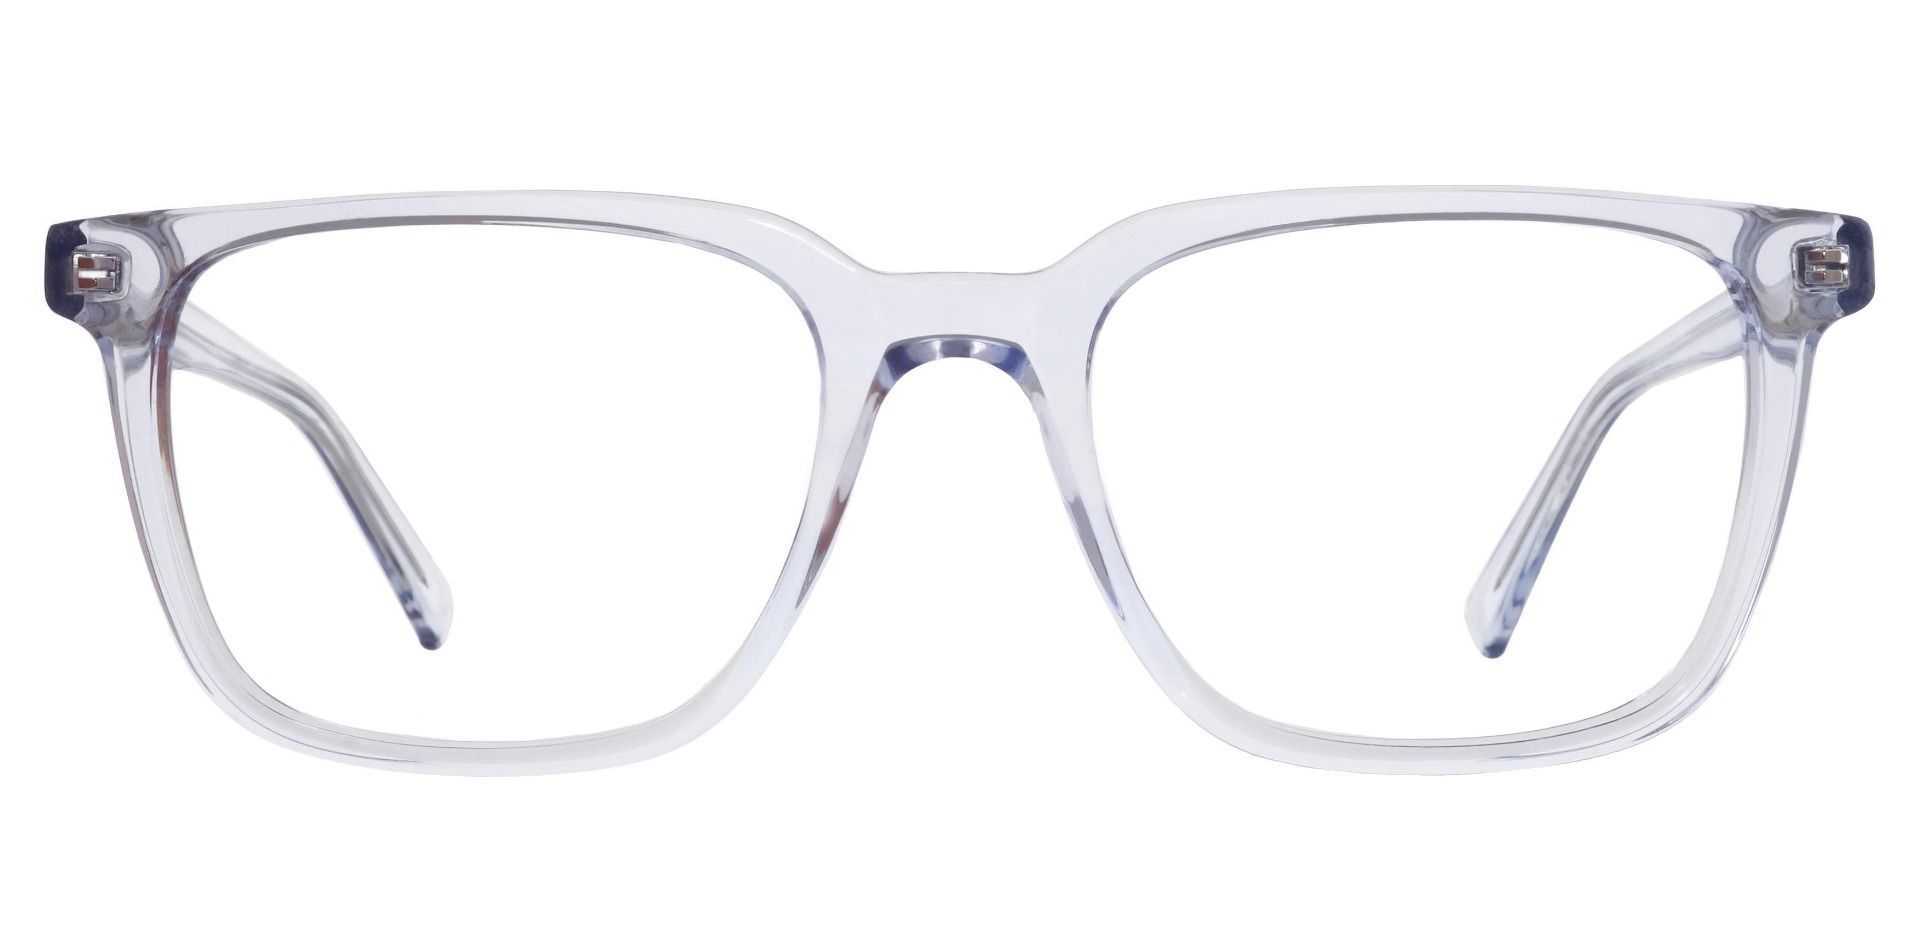 Alex Square Prescription Glasses - Clear | Men's Eyeglasses | Payne Glasses